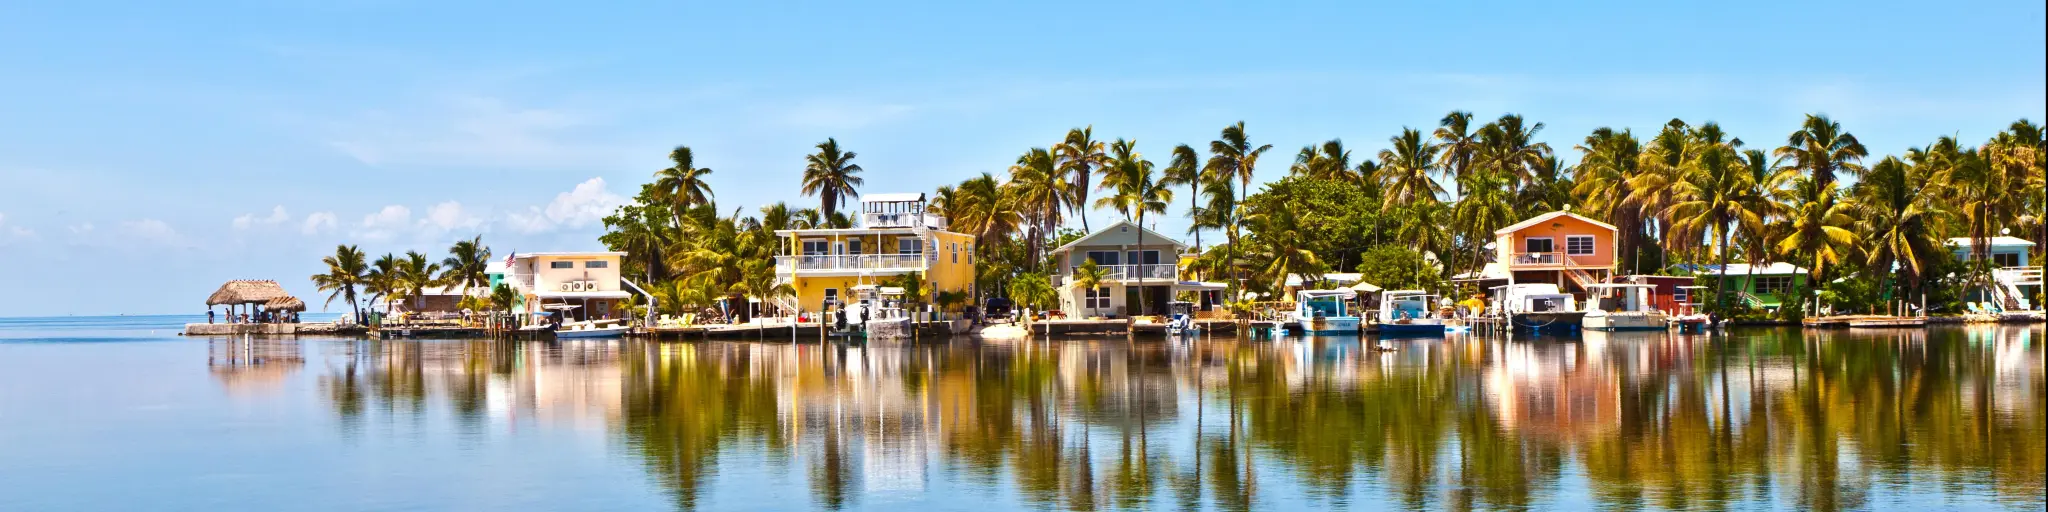 Beautiful living area in the Keys